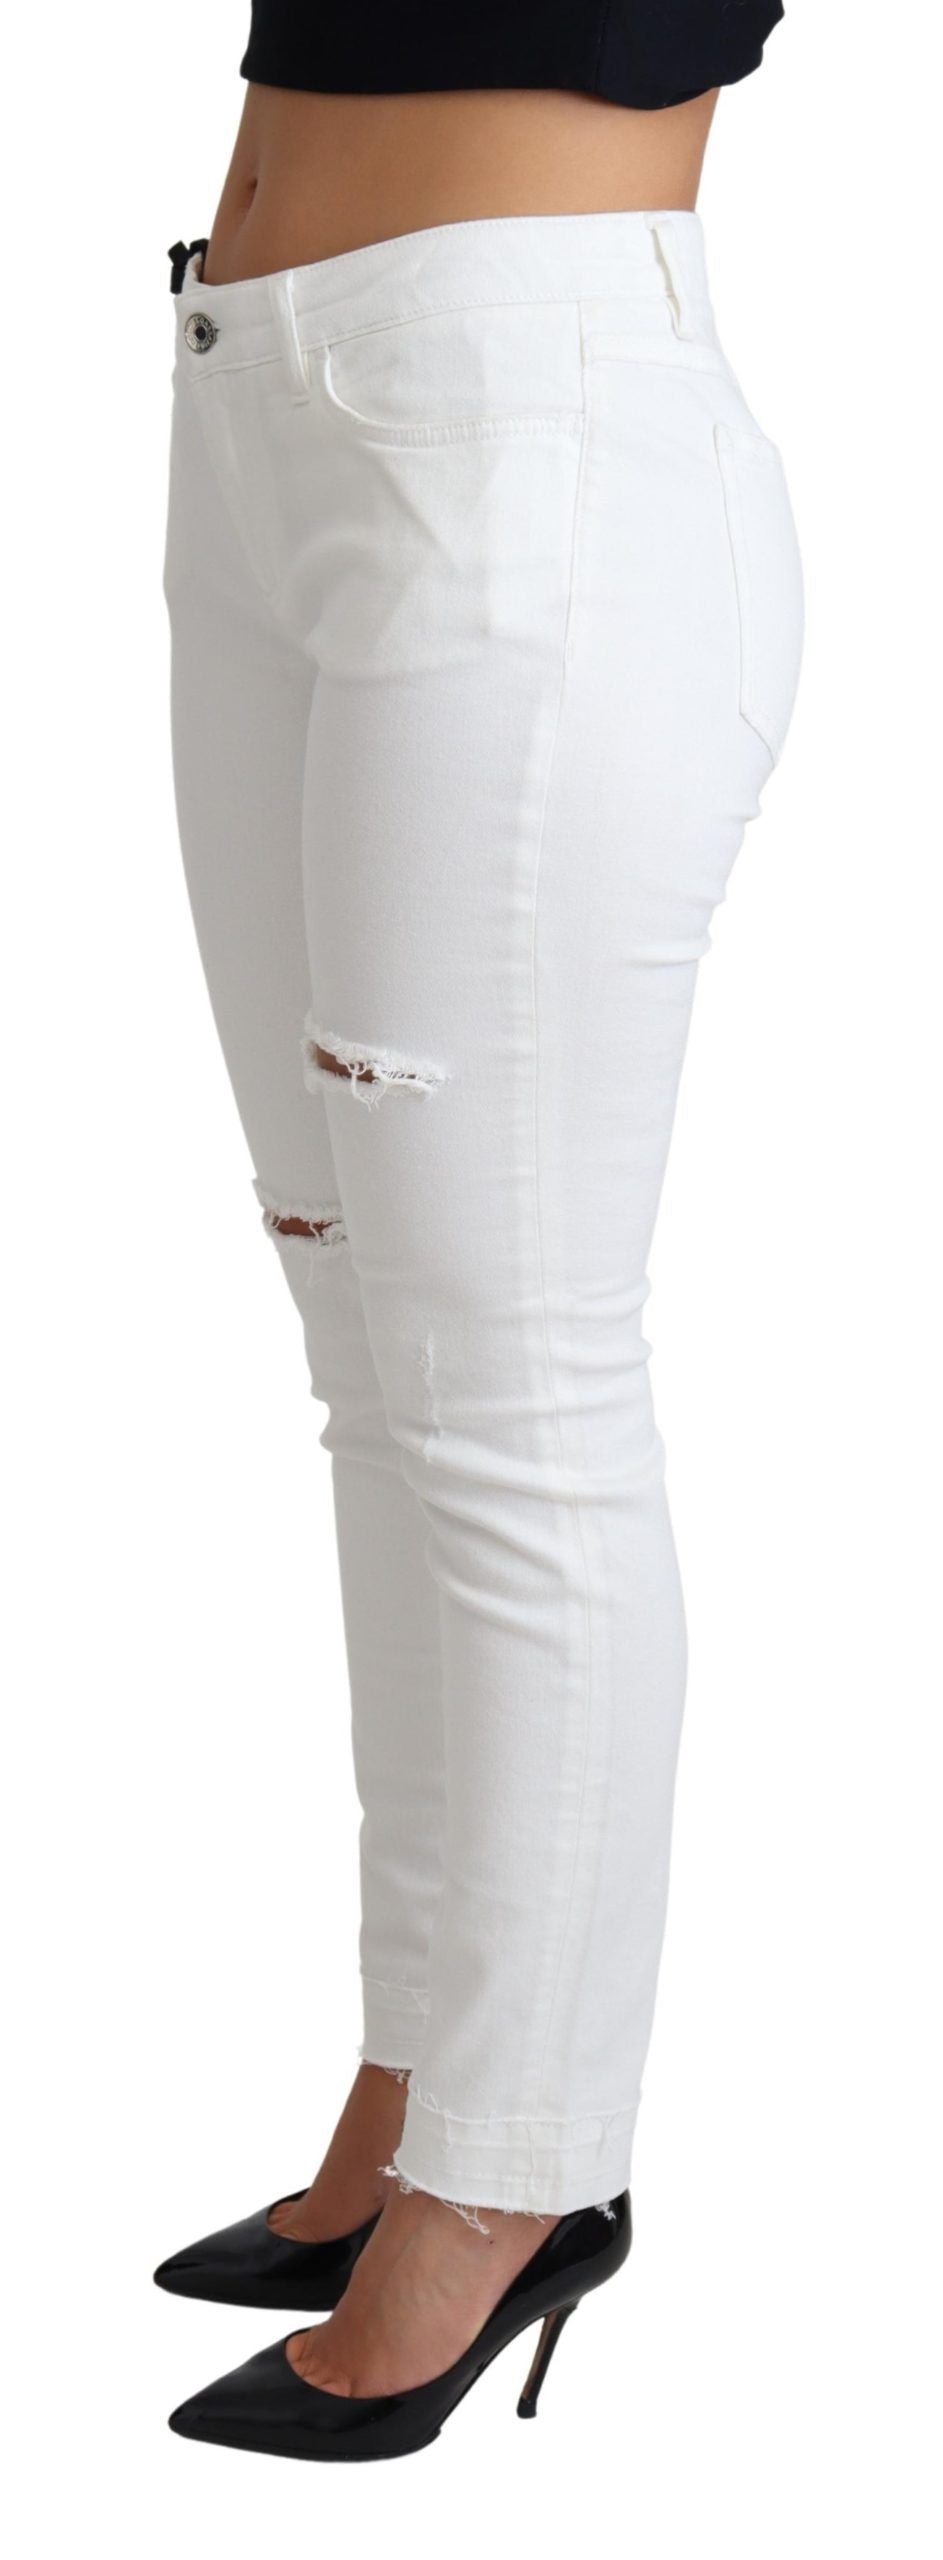 White Tattered Skinny Denim Cotton Stretch Jeans